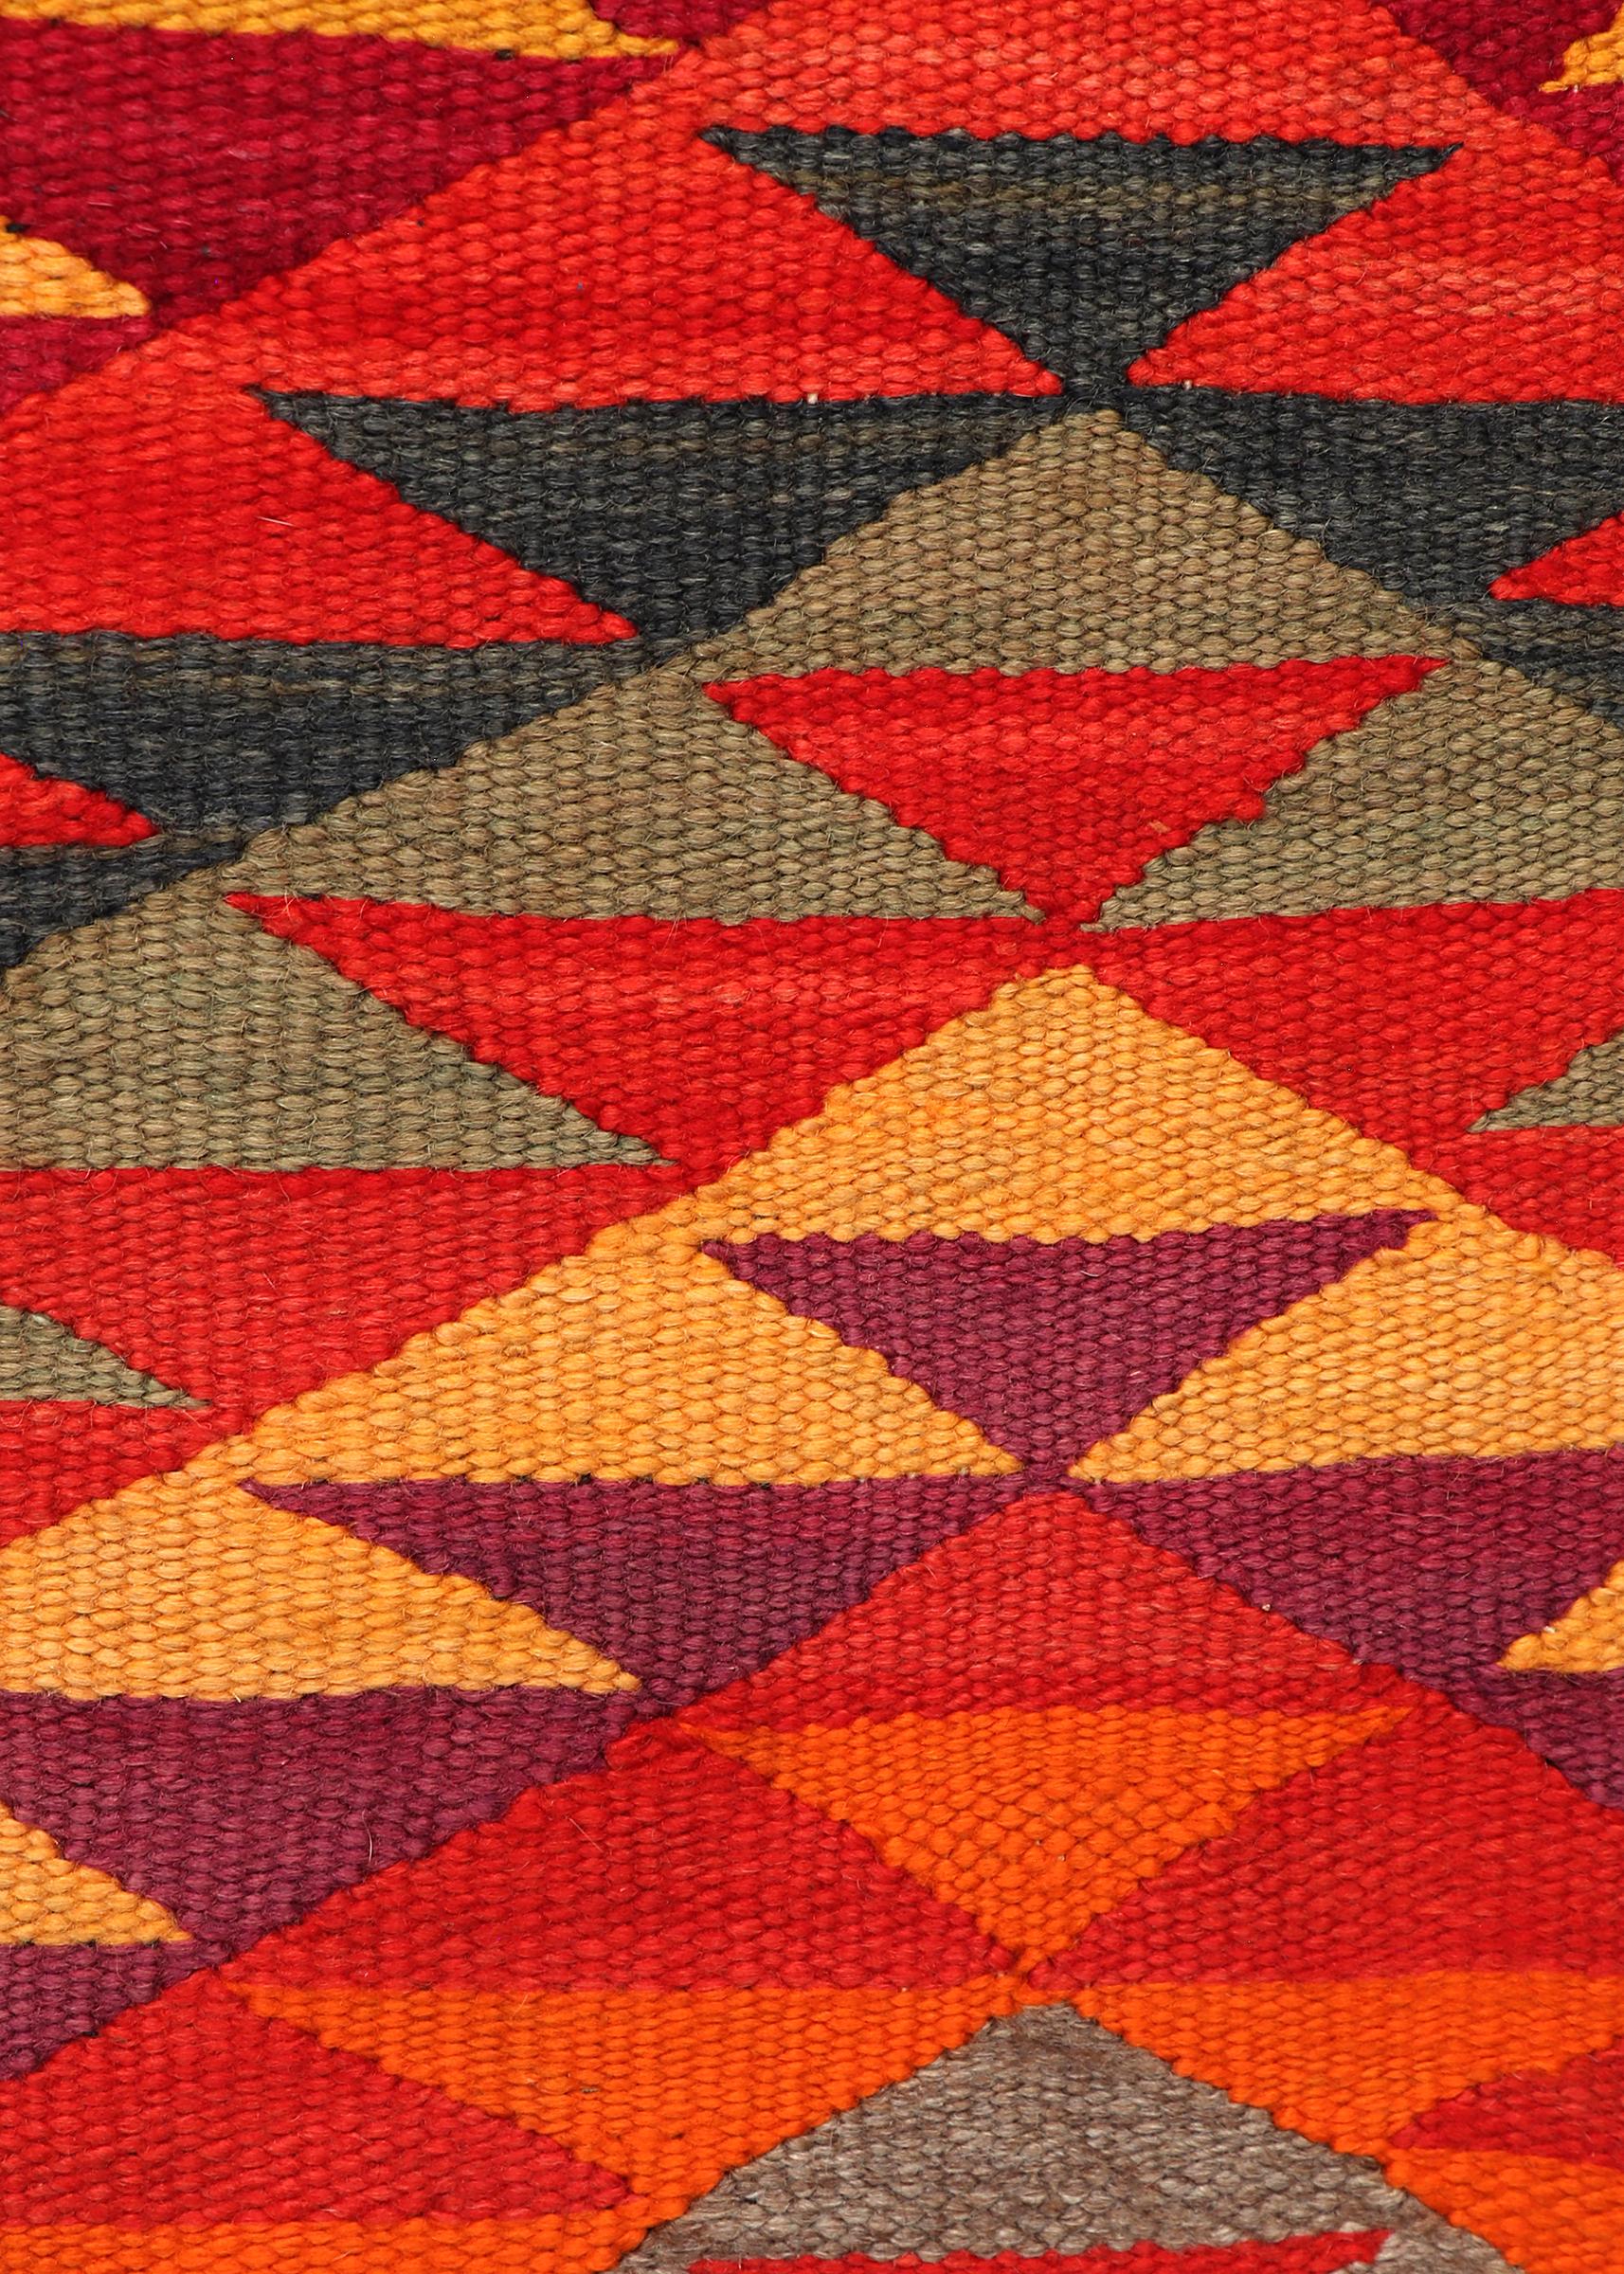 Woven 1885 Navajo Weaving in Jewel Tones, Red, Yellow, Orange, and Brown